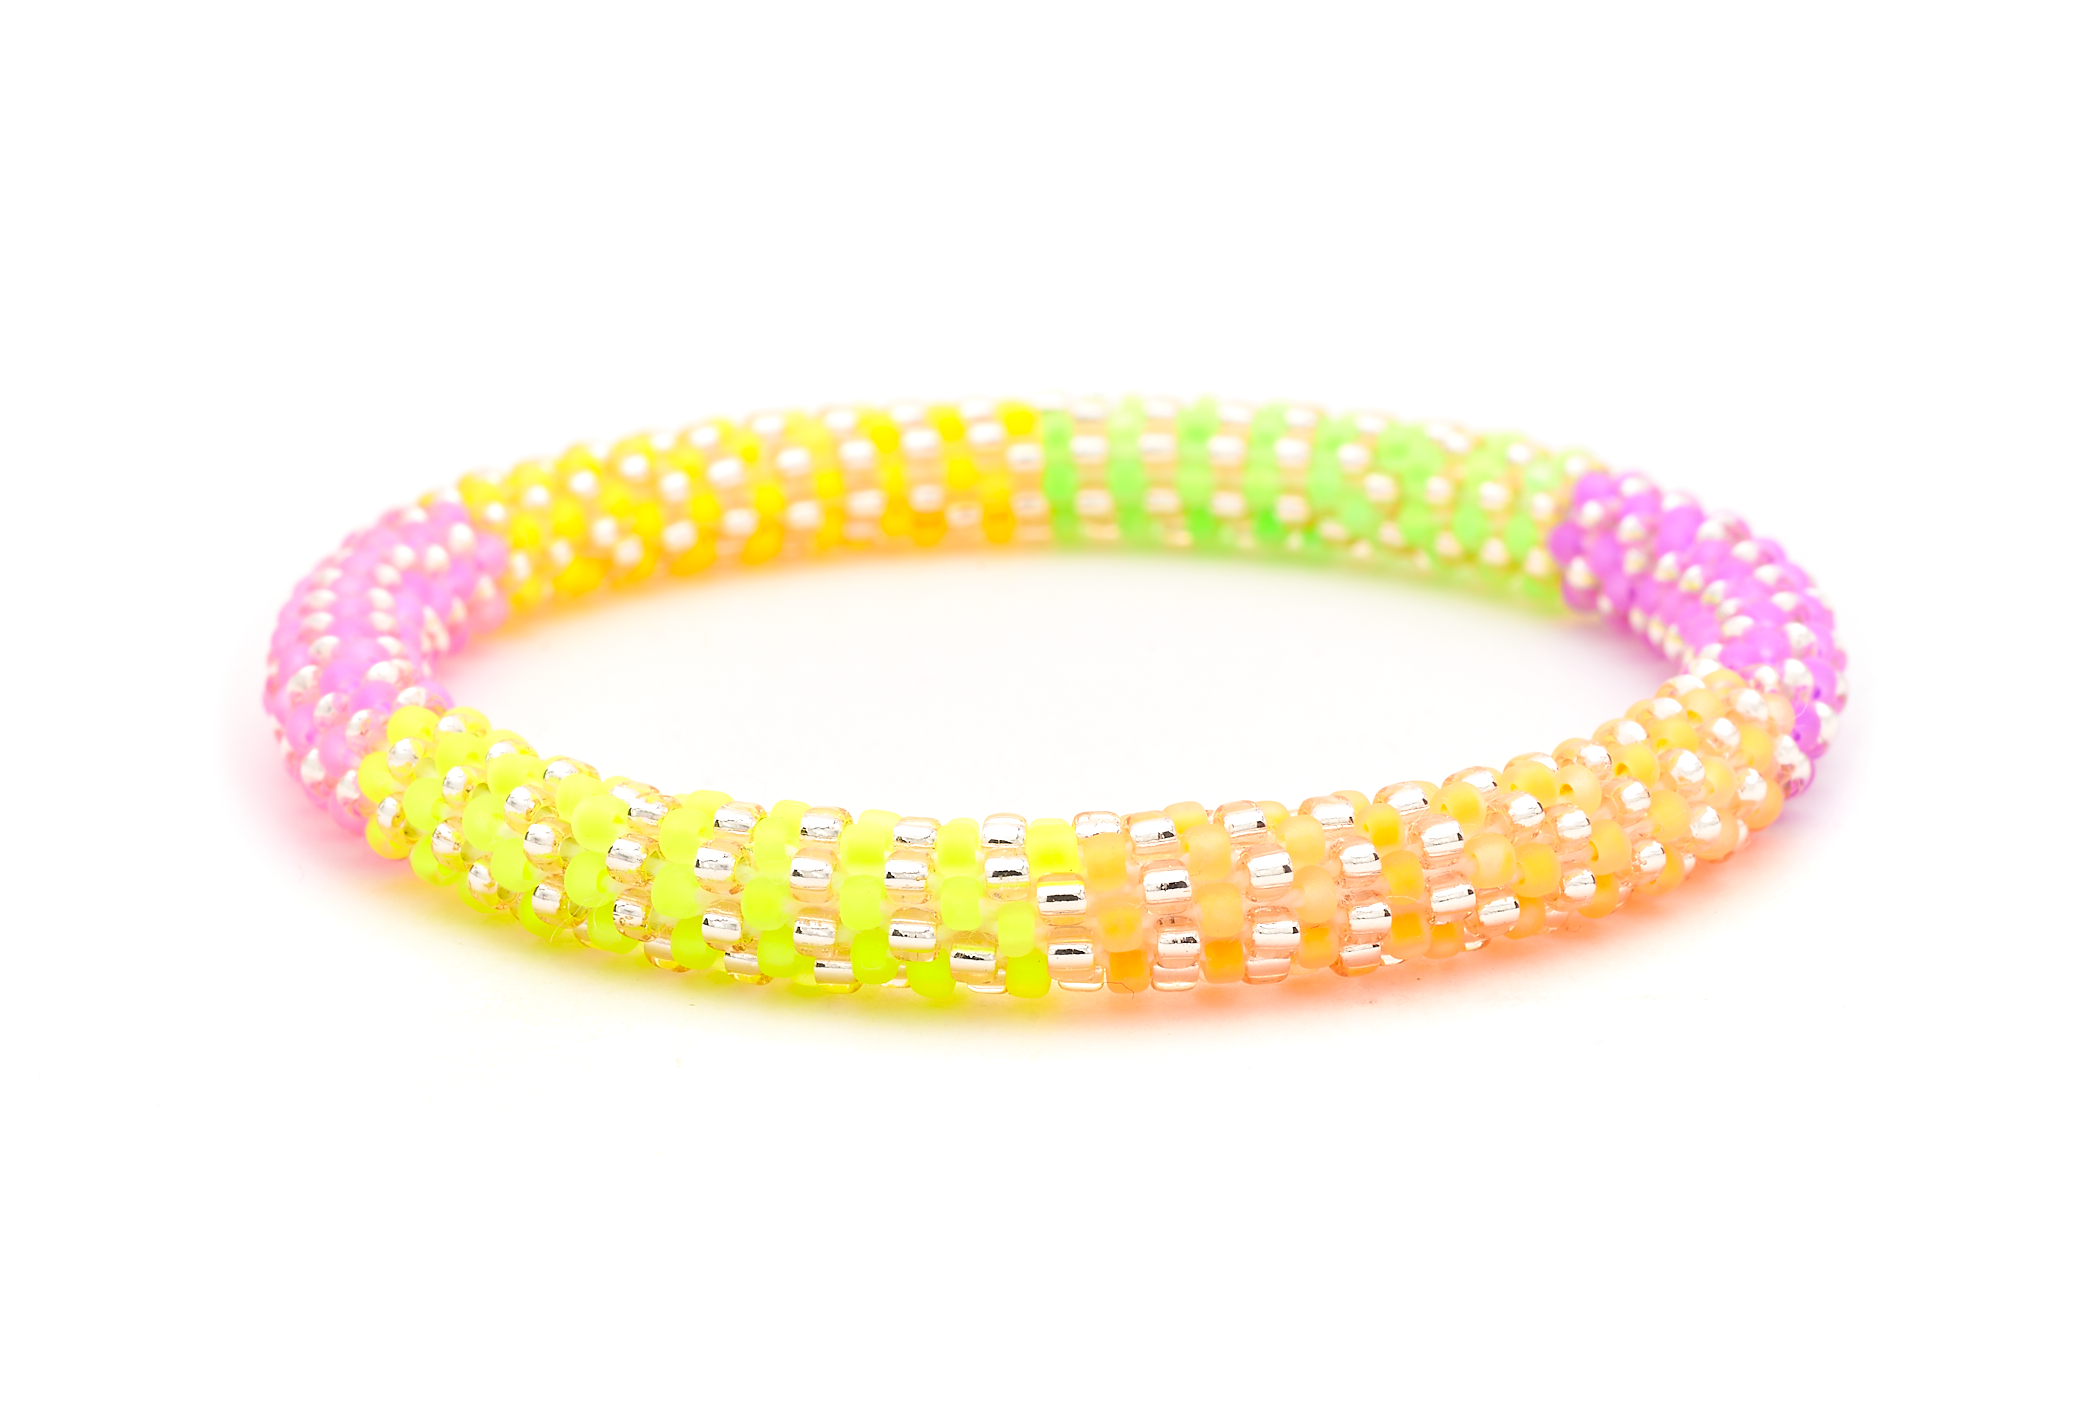 Sashka Co. Extended 8" Bracelet Neon Yellow / Green / Orange / Pink / Purple / Rose Gold Summer Fun Bracelet - Extended 8"